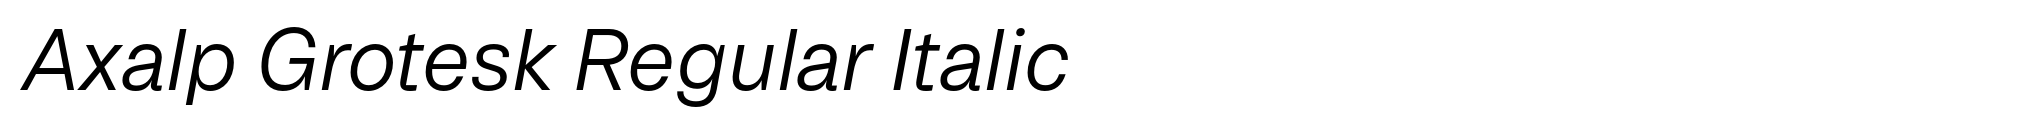 Axalp Grotesk Regular Italic image